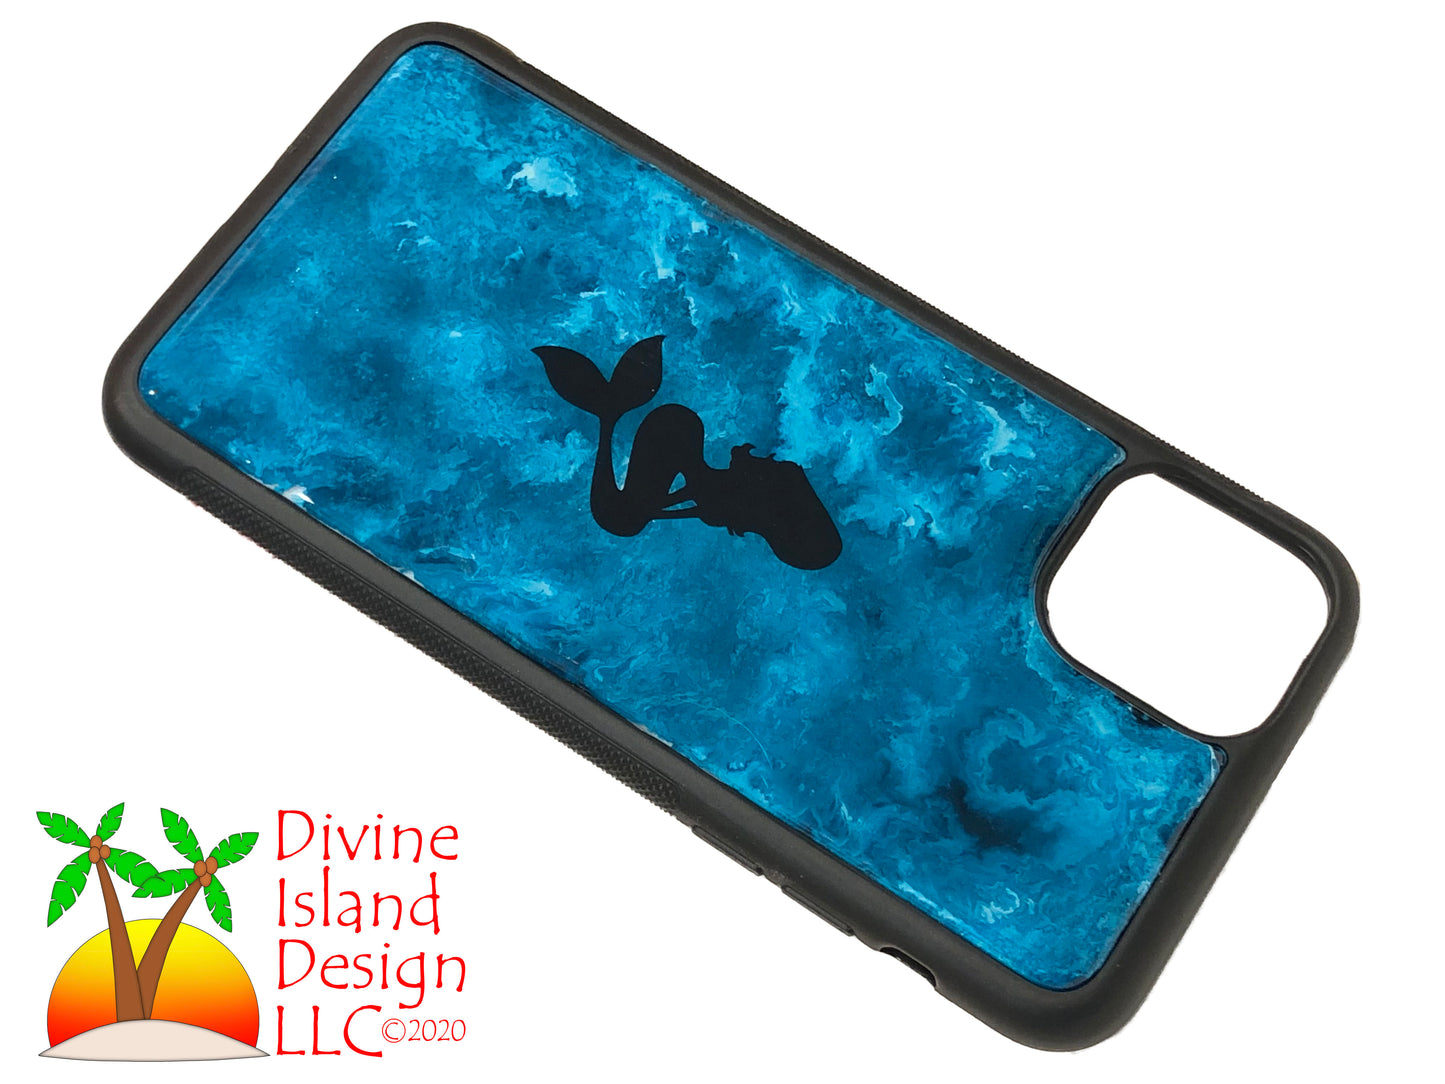 iPhone 11 Pro Max Phone Case - Blue Water Resin w/Mermaid